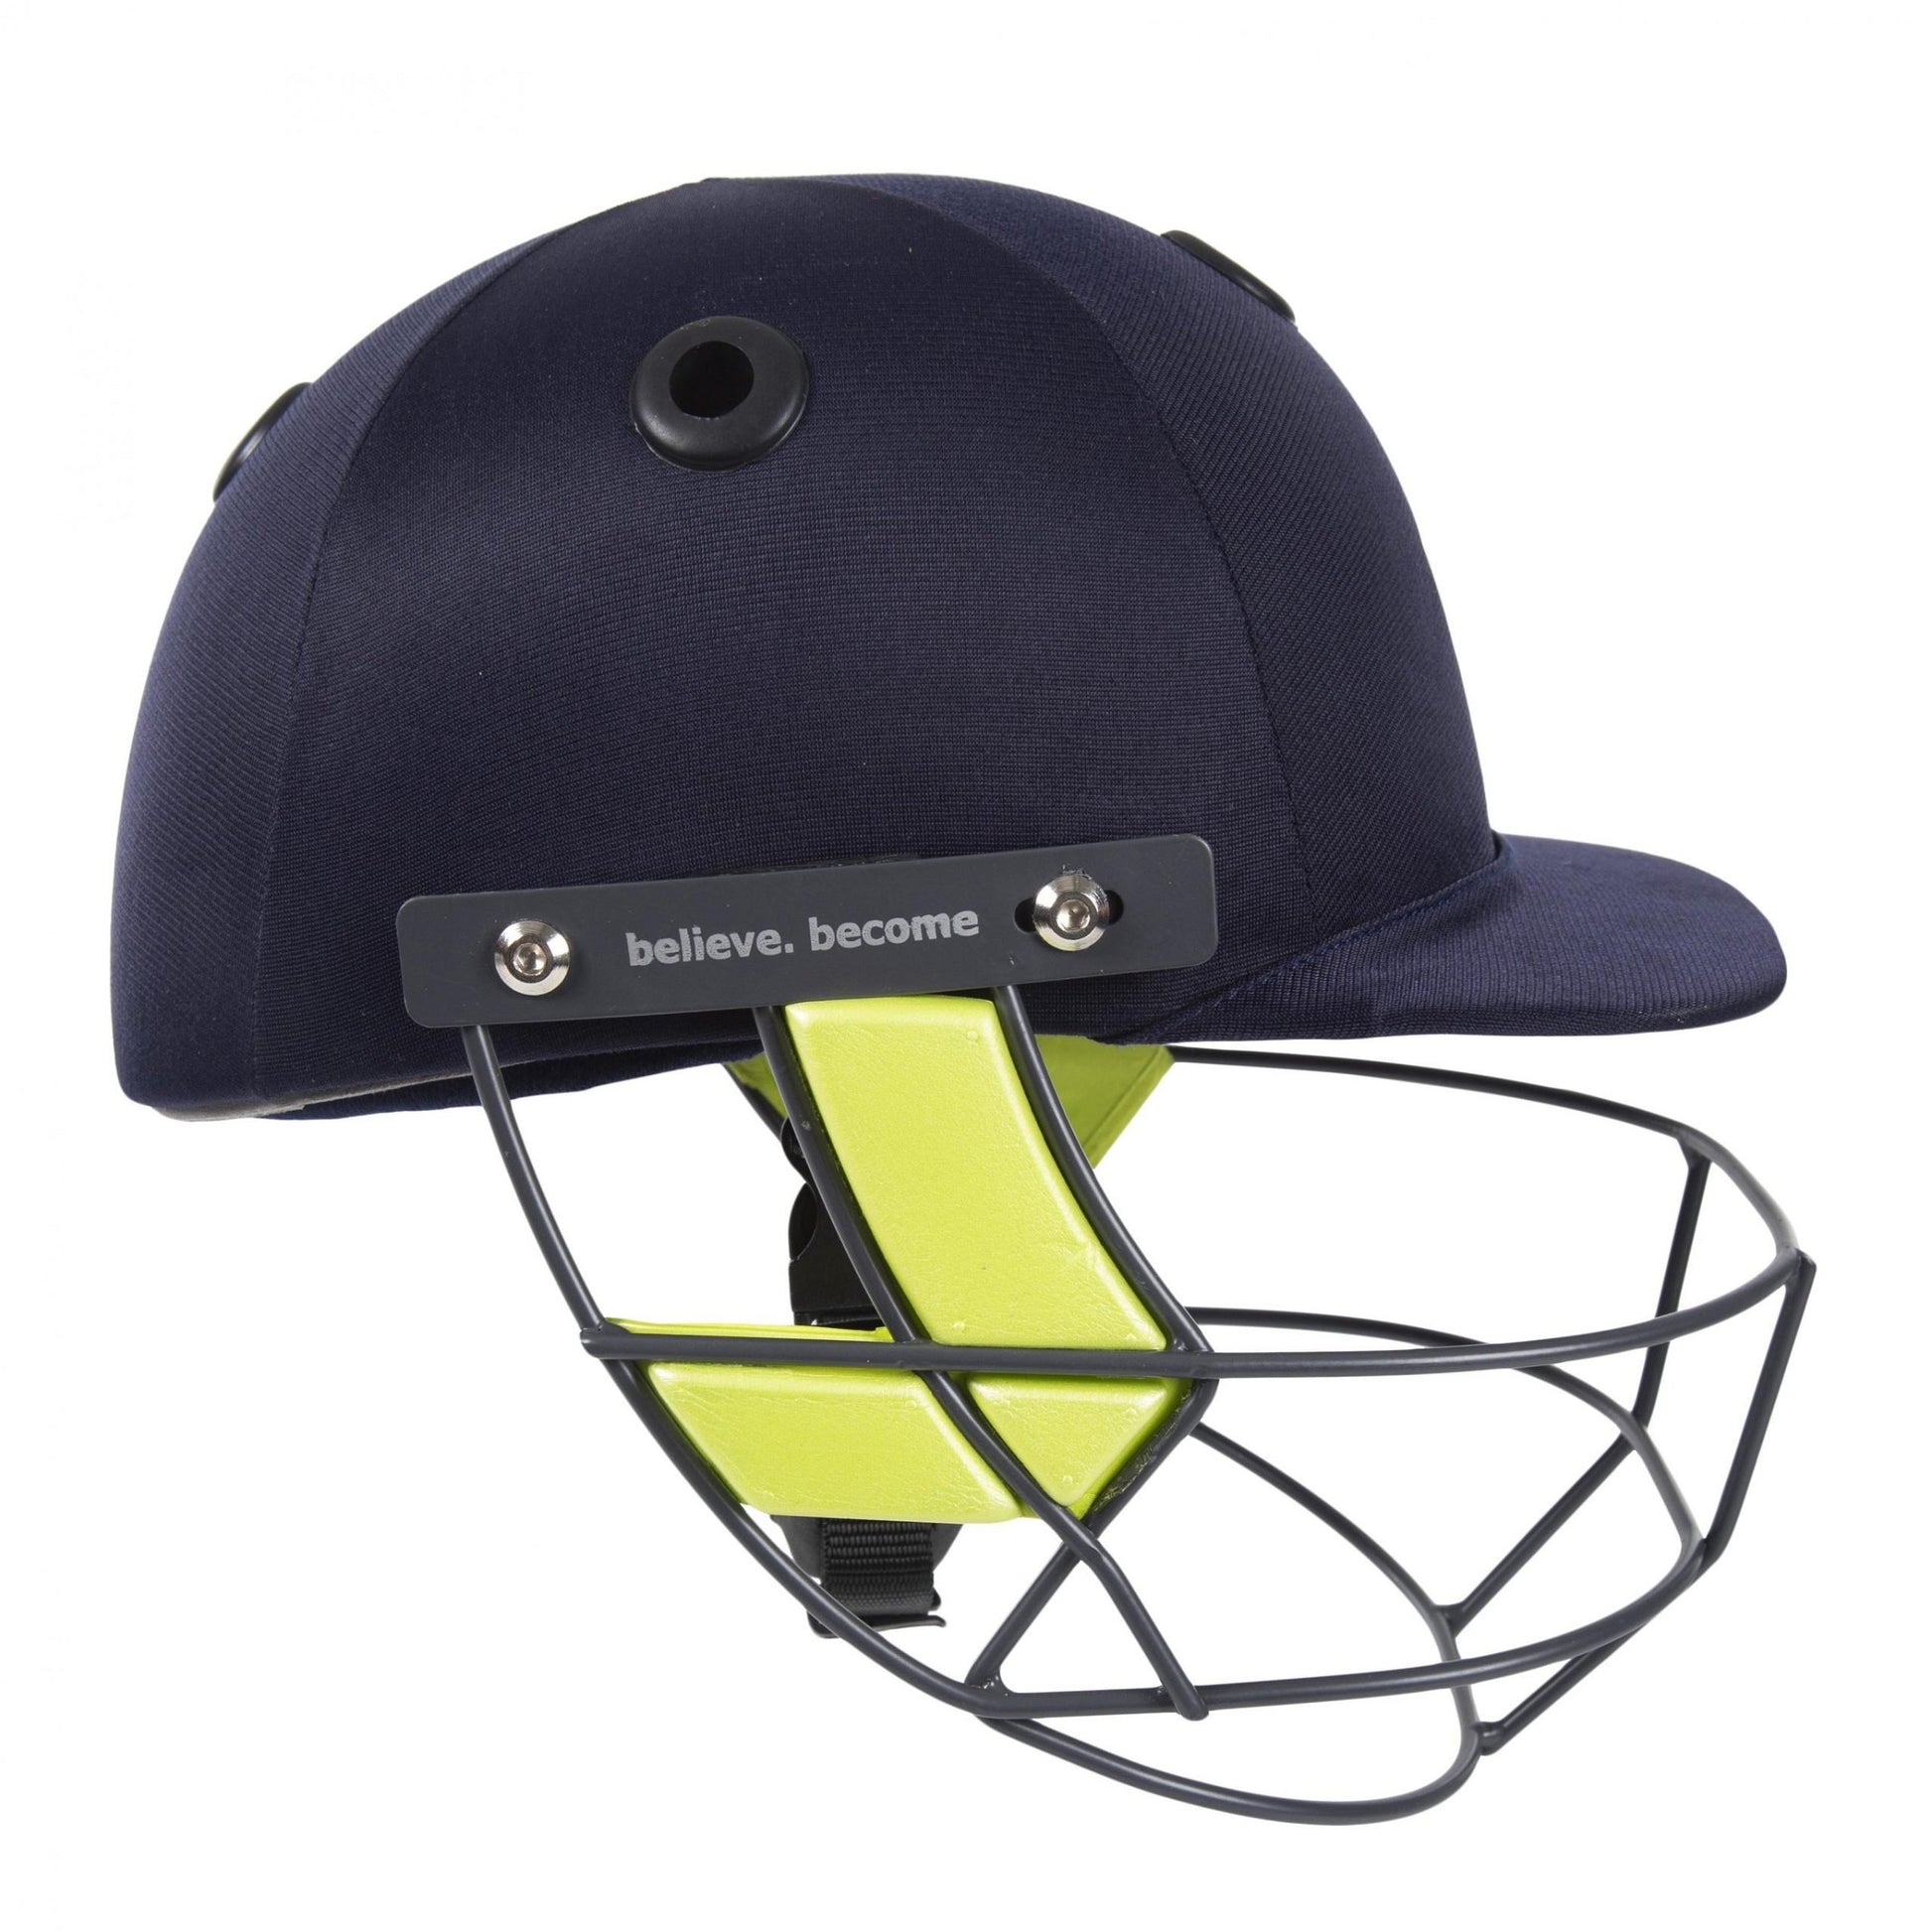 SG Aeroselect Cricket Helmet